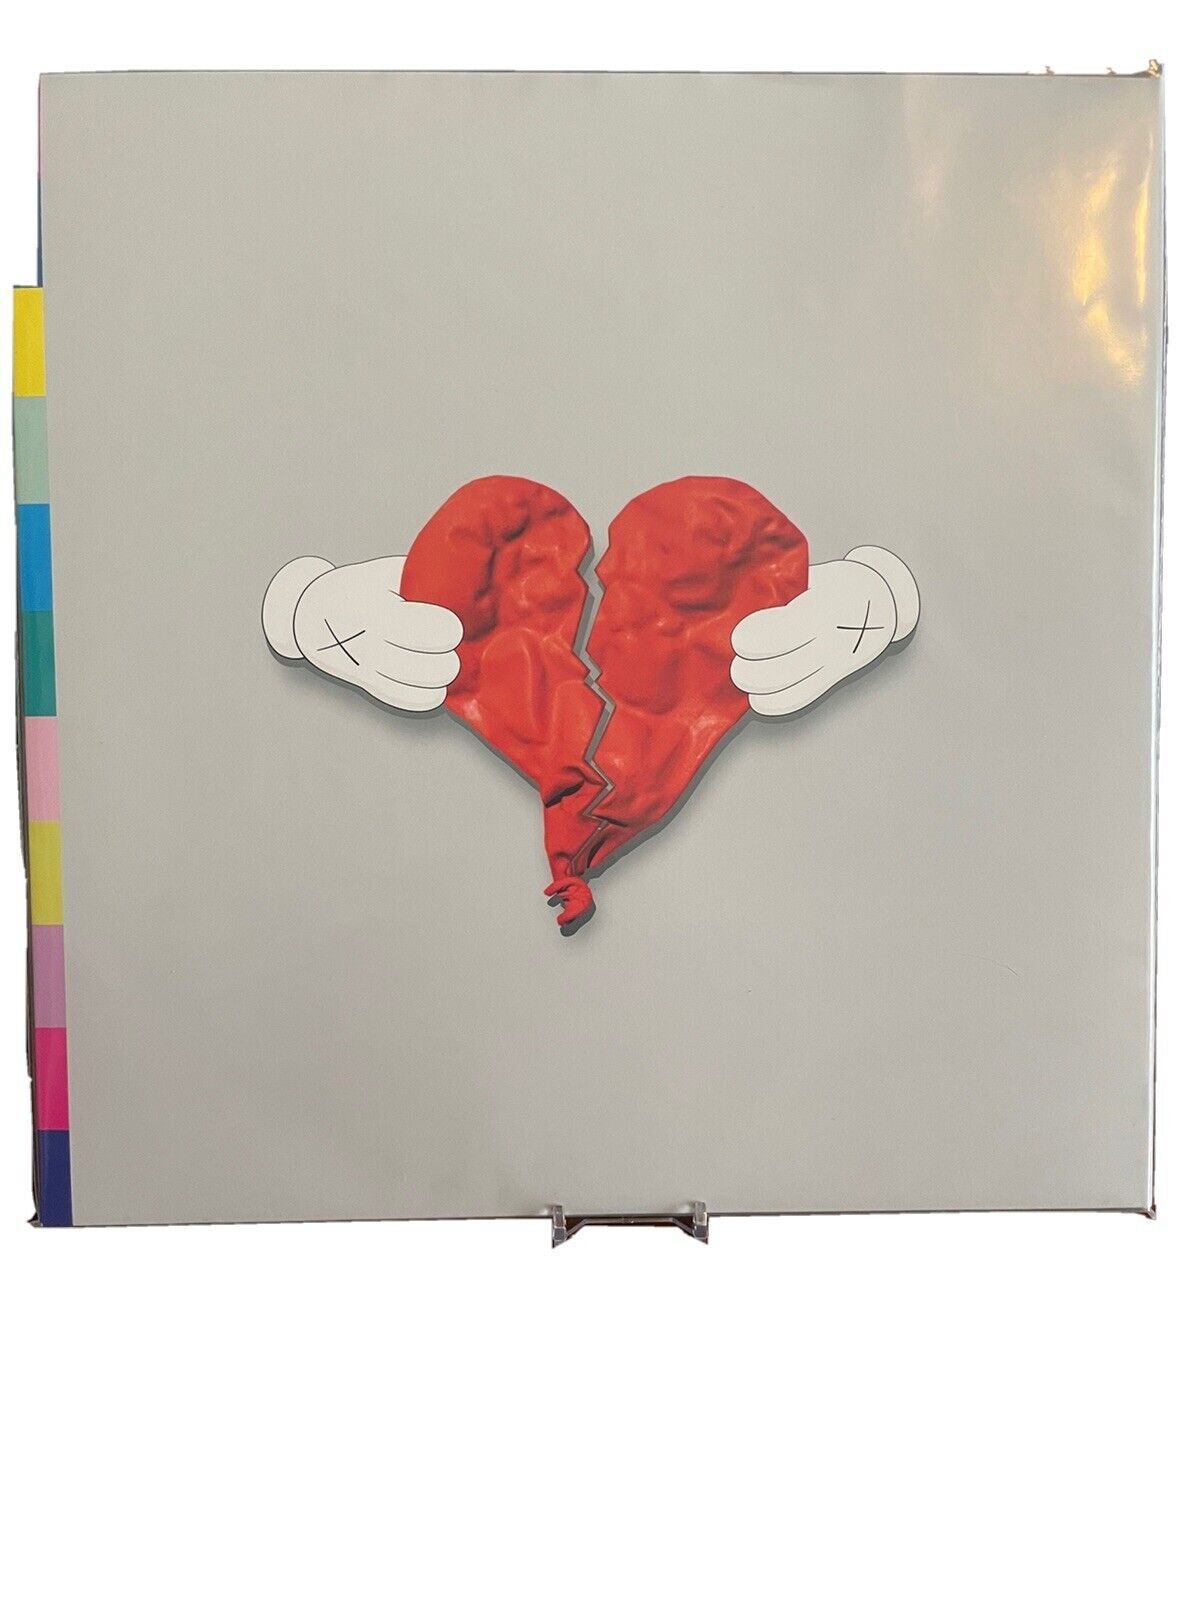 Kanye West – 808s & Heartbreak - 2 LP + CD + Poster Vinyl Records 12